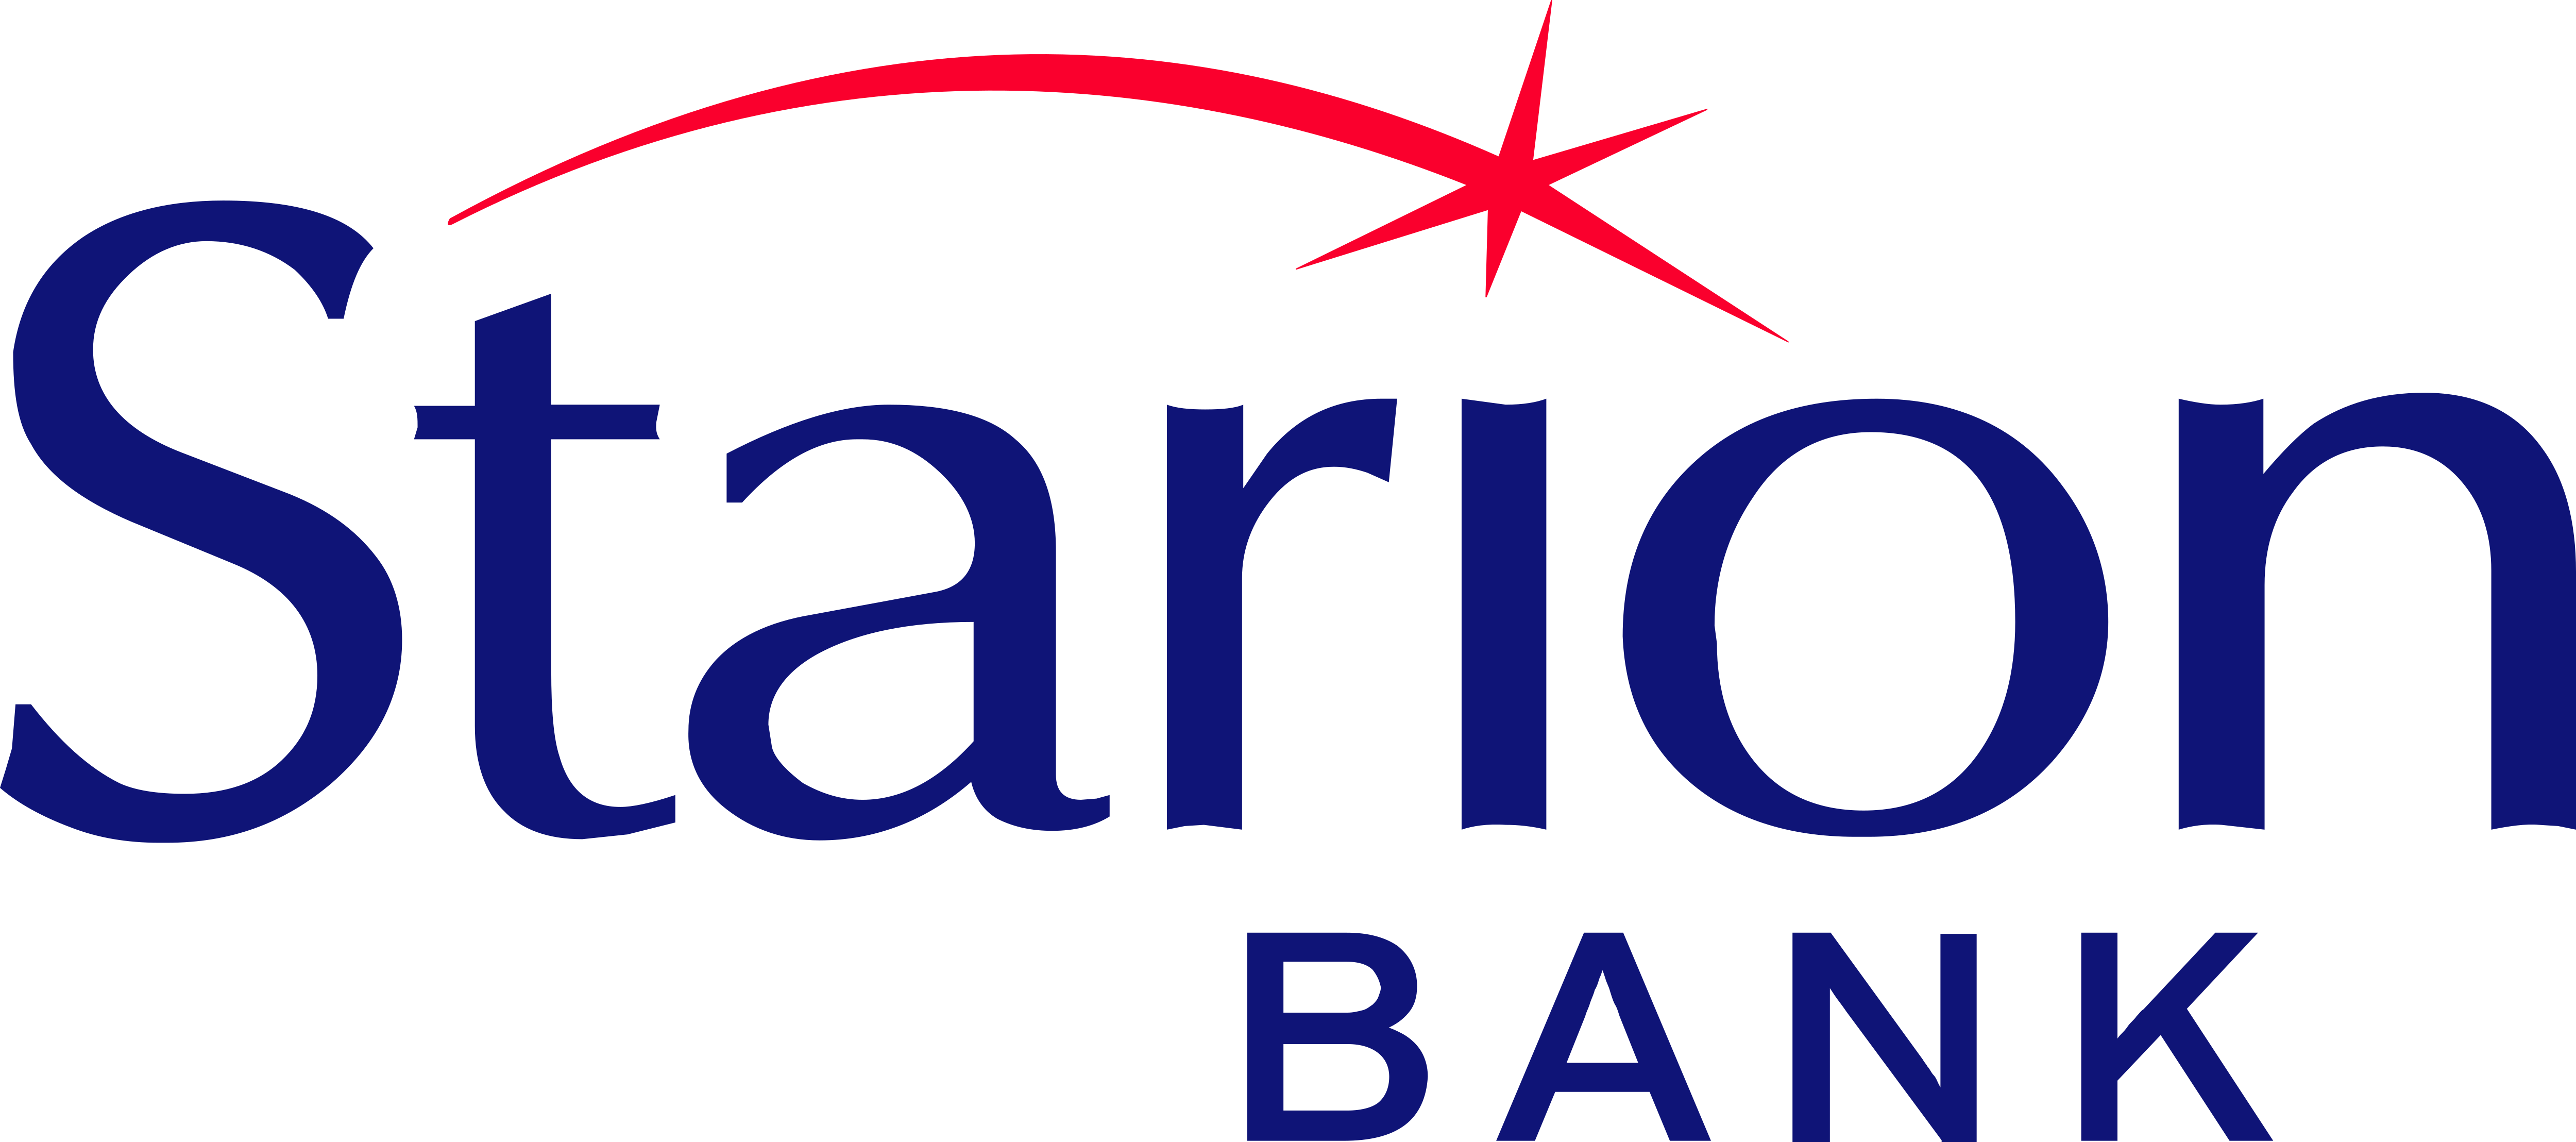 Far bank. Логотип Converse Bank. Mono Bank logo. Старион логотип. Credo Bank logo.